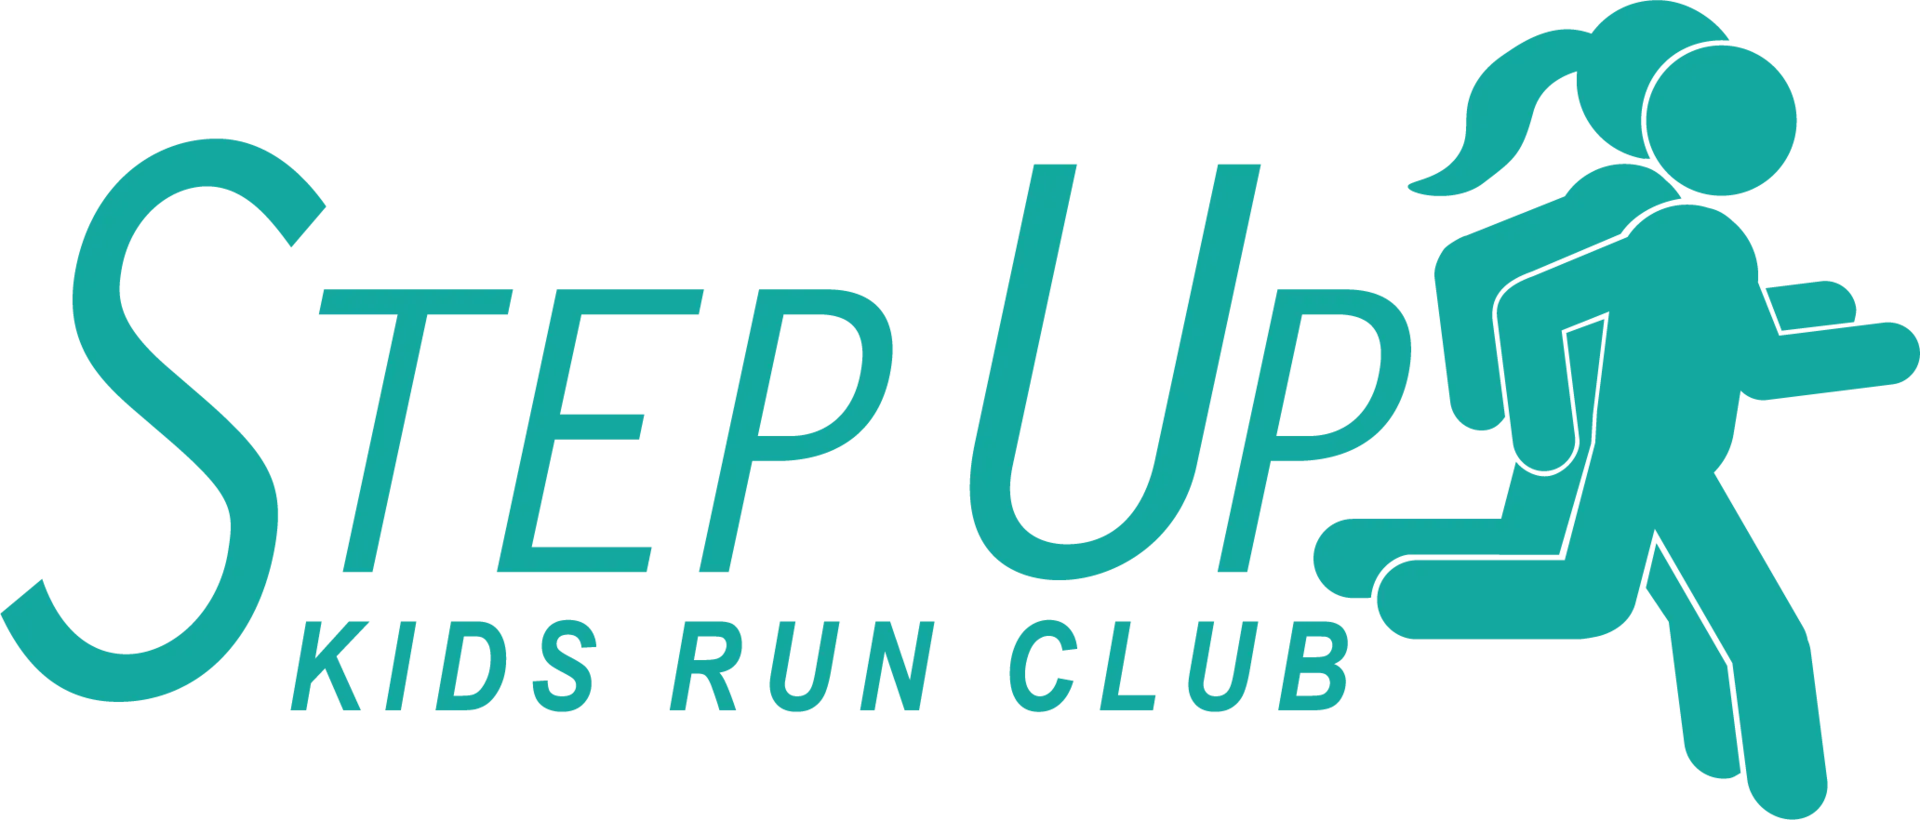 Step Up Kids Run Club